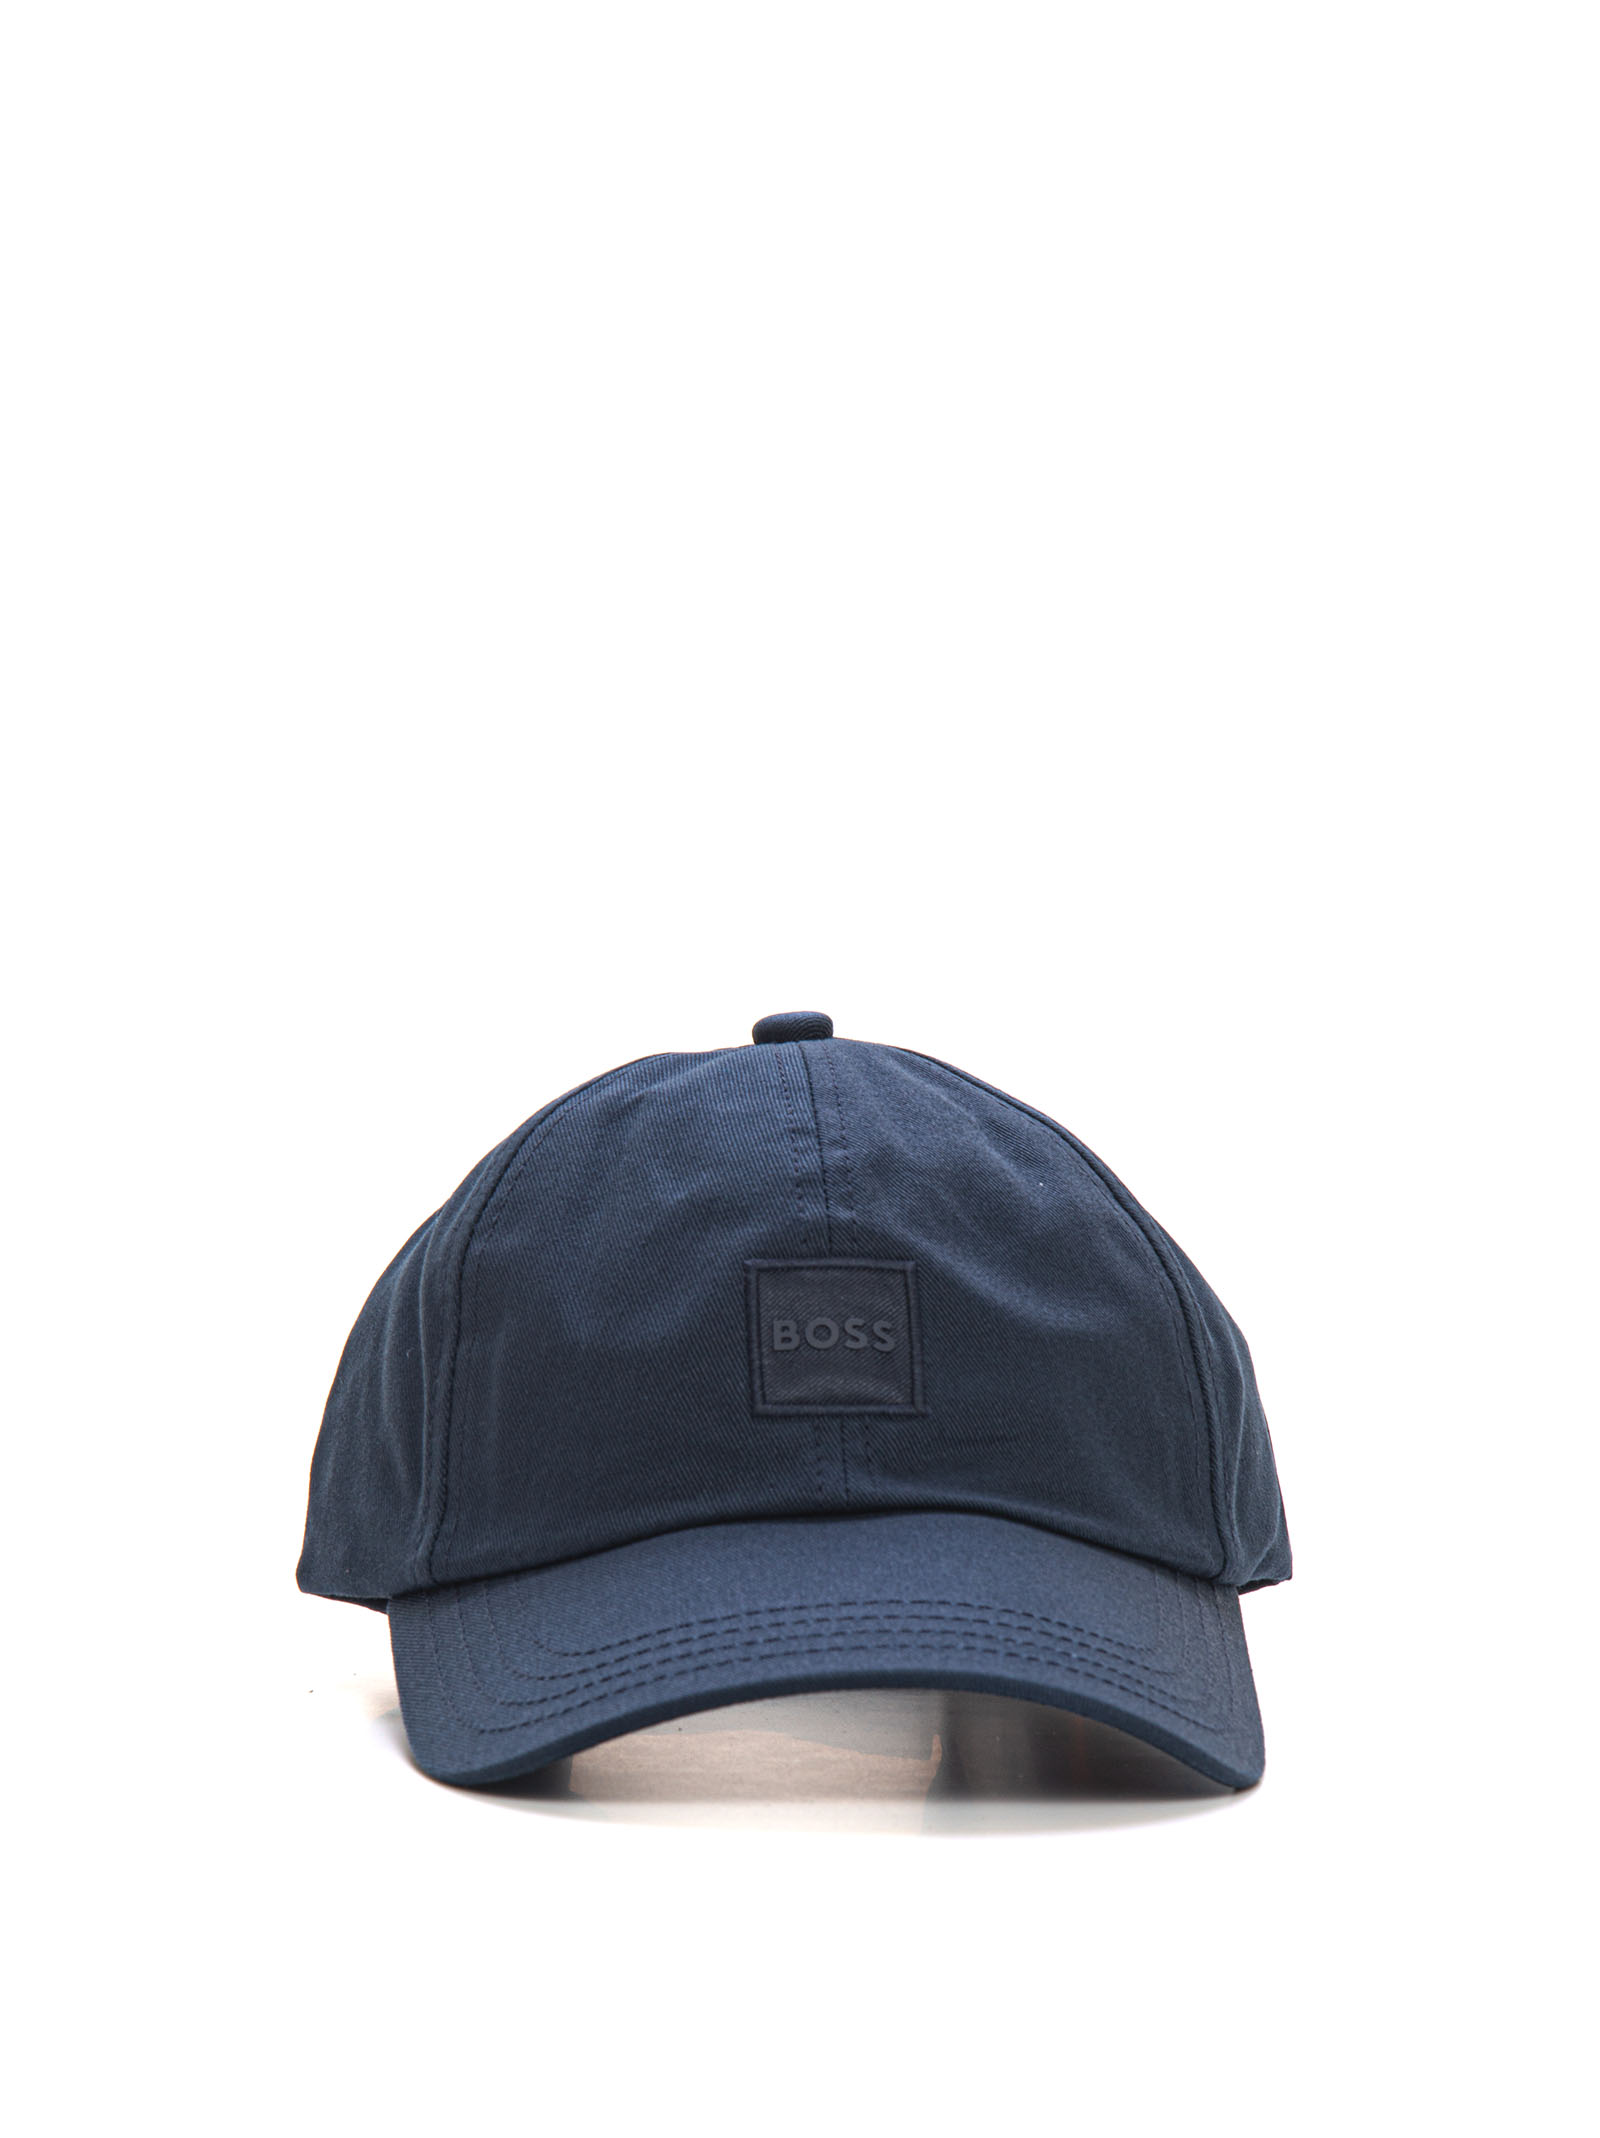 Hugo Boss Derrel Peaked Hat In Blue